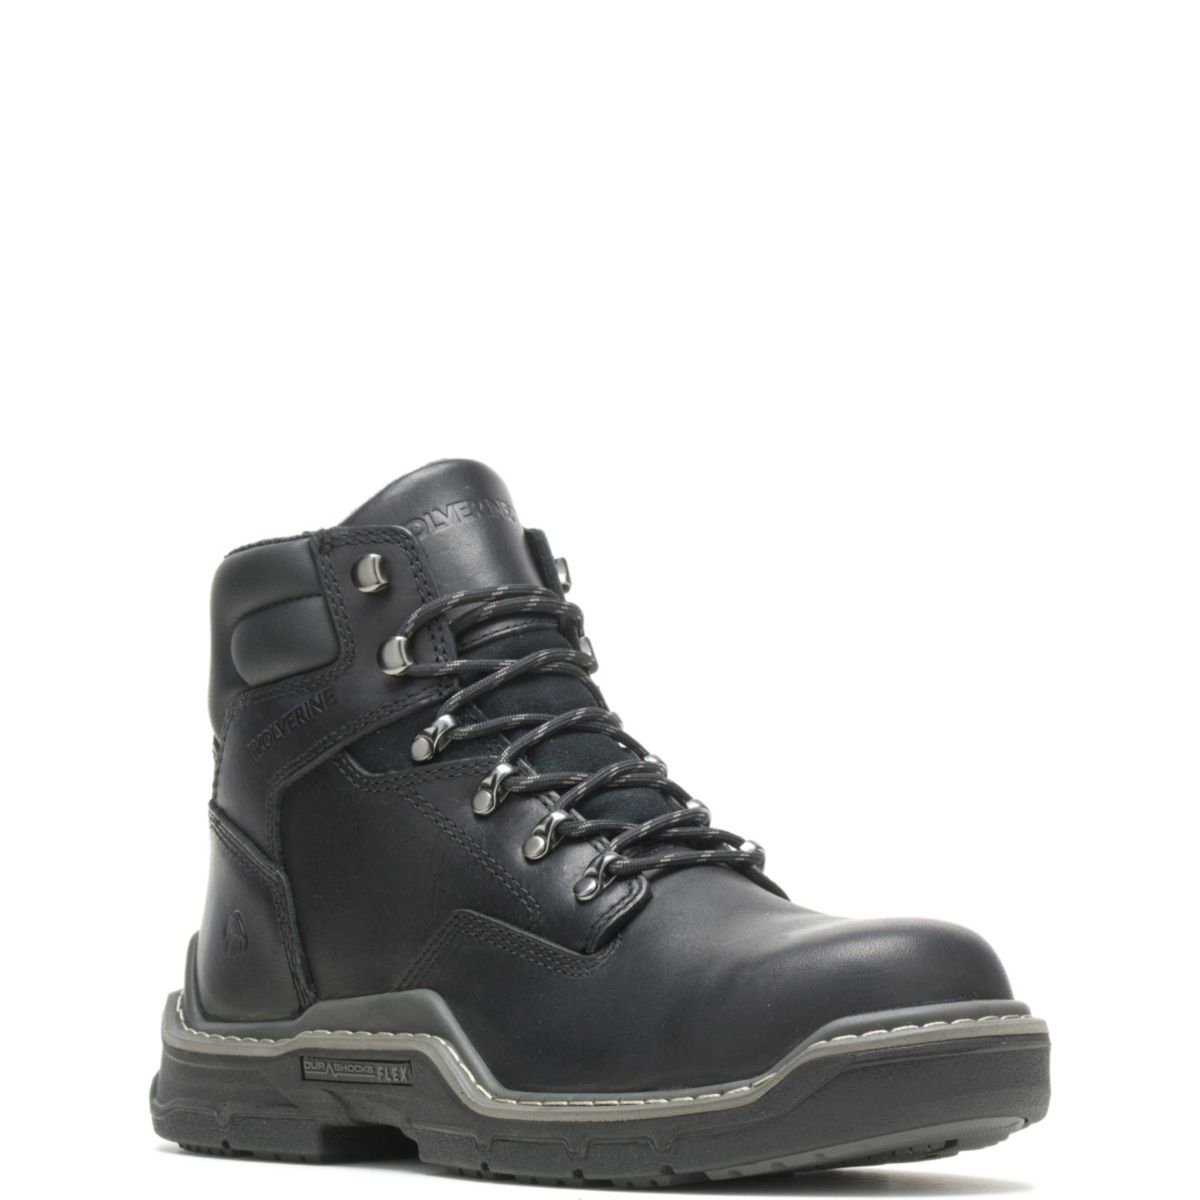 WOLVERINE Men's Raider 6 DuraShocksÂ® CarbonMAXÂ® Composite Toe Work Boot Black - W211100 BLACK - BLACK, 9